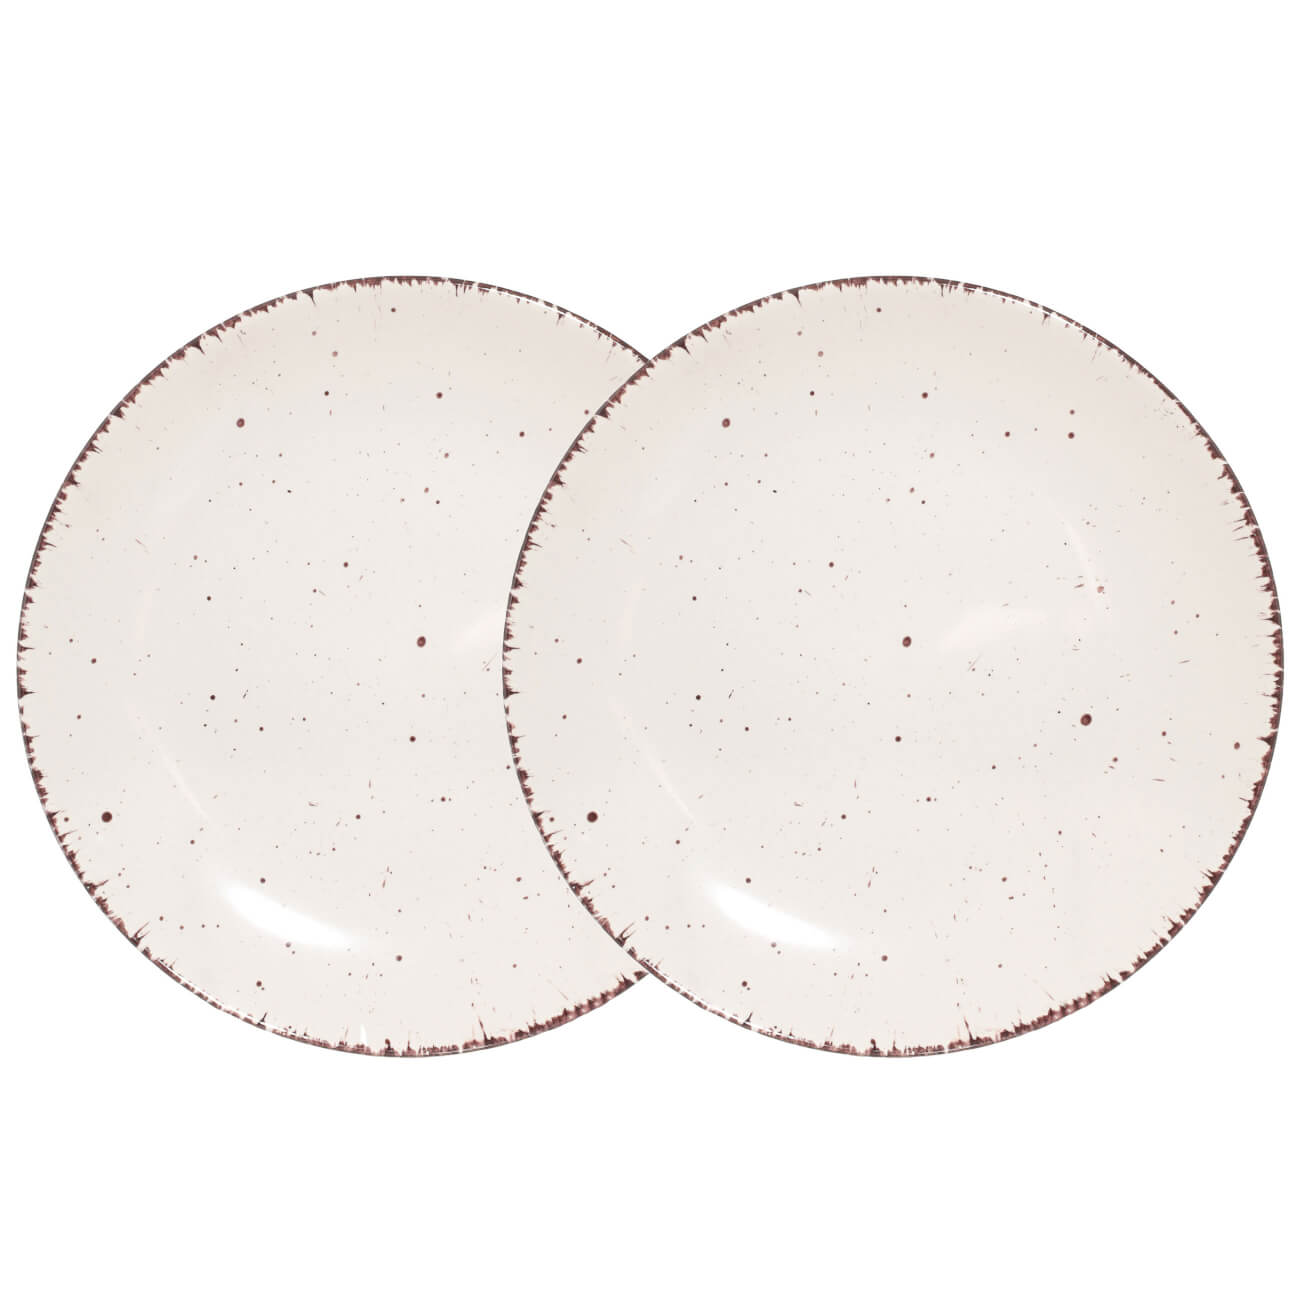 тарелка закусочная lefard лесная сказка олени 20 5 см Тарелка закусочная, 21 см, 2 шт, керамика, бежевая, в крапинку, Speckled